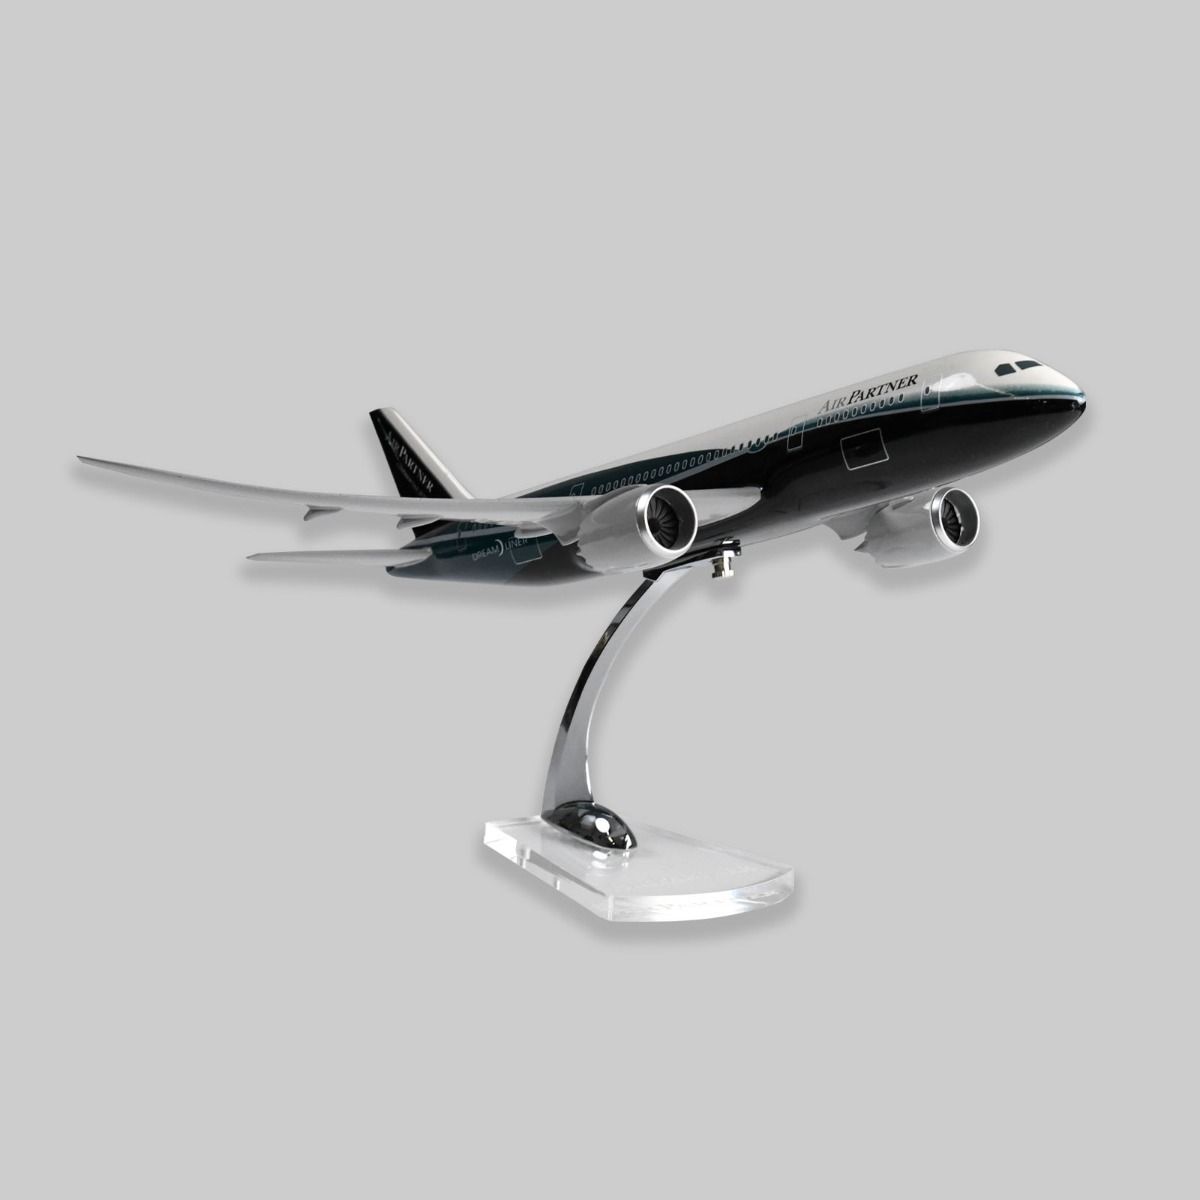 Air Partner Airplane Model Ornament